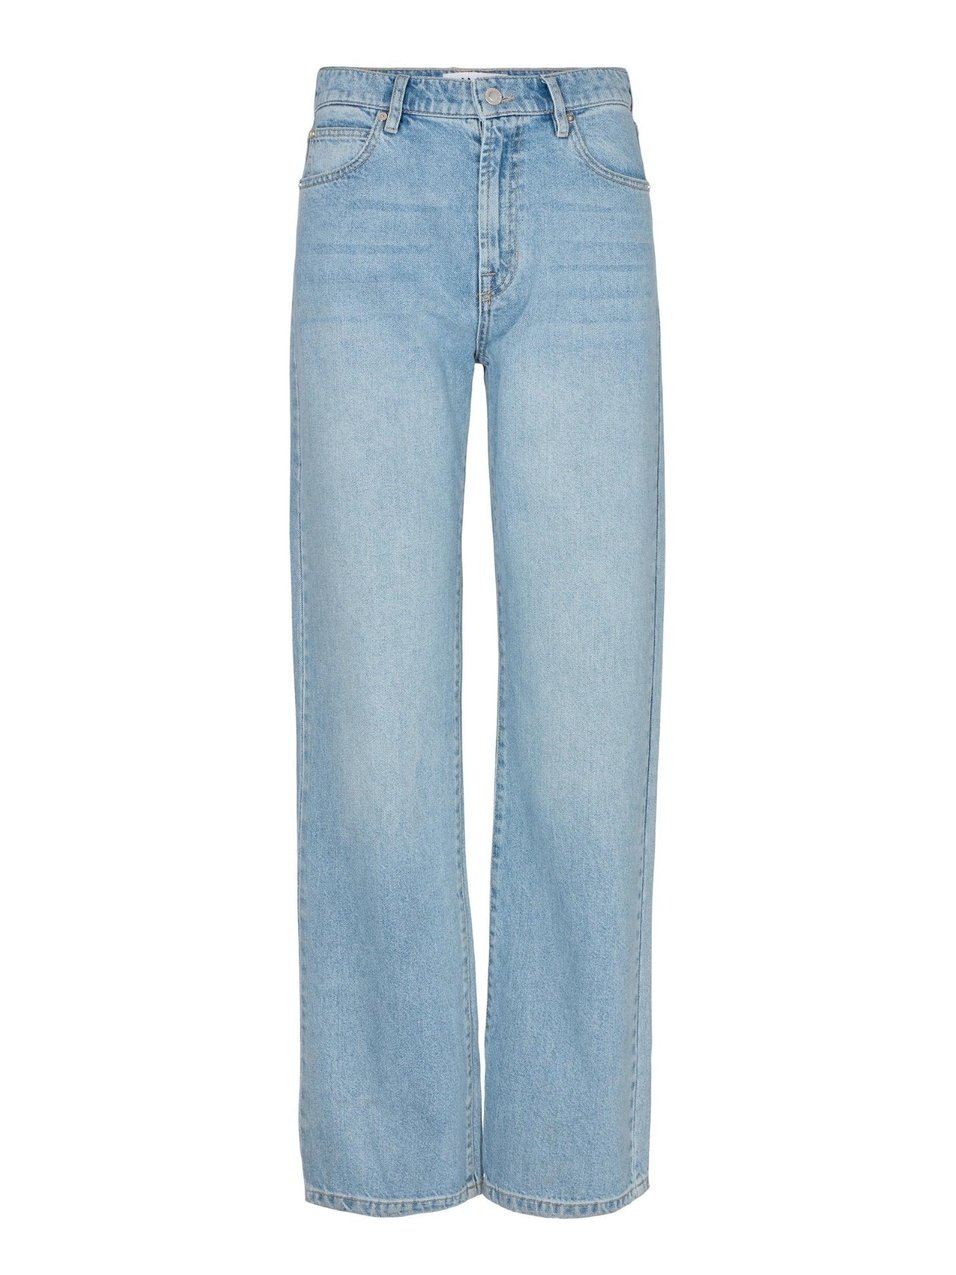  BukserIVY Copenhagen Mia Straight Jeans Wash - Varadero